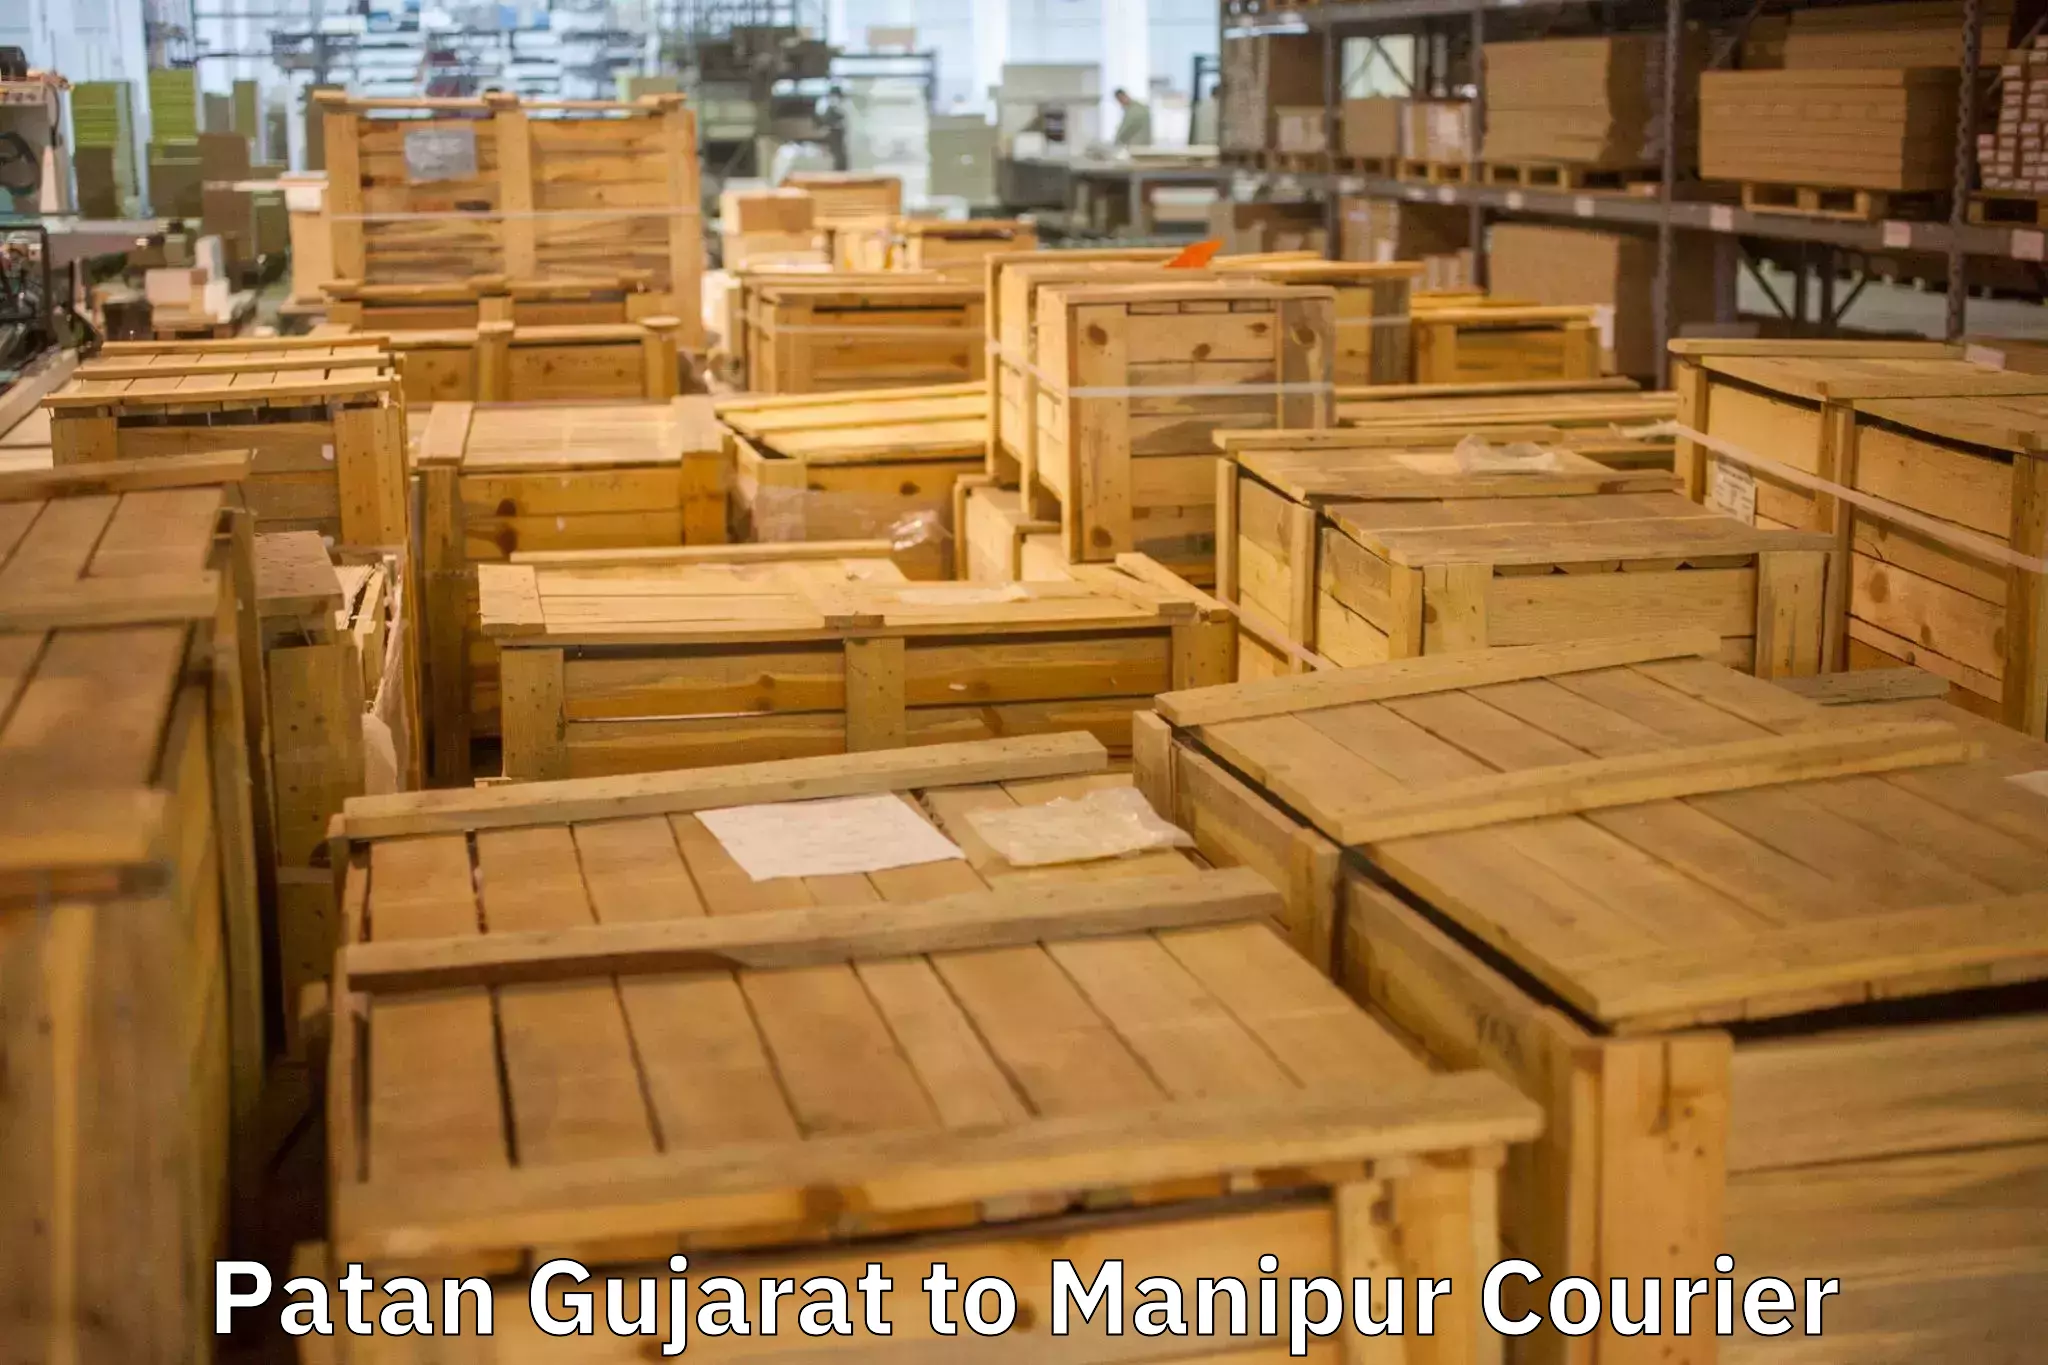 Efficient moving strategies Patan Gujarat to Manipur